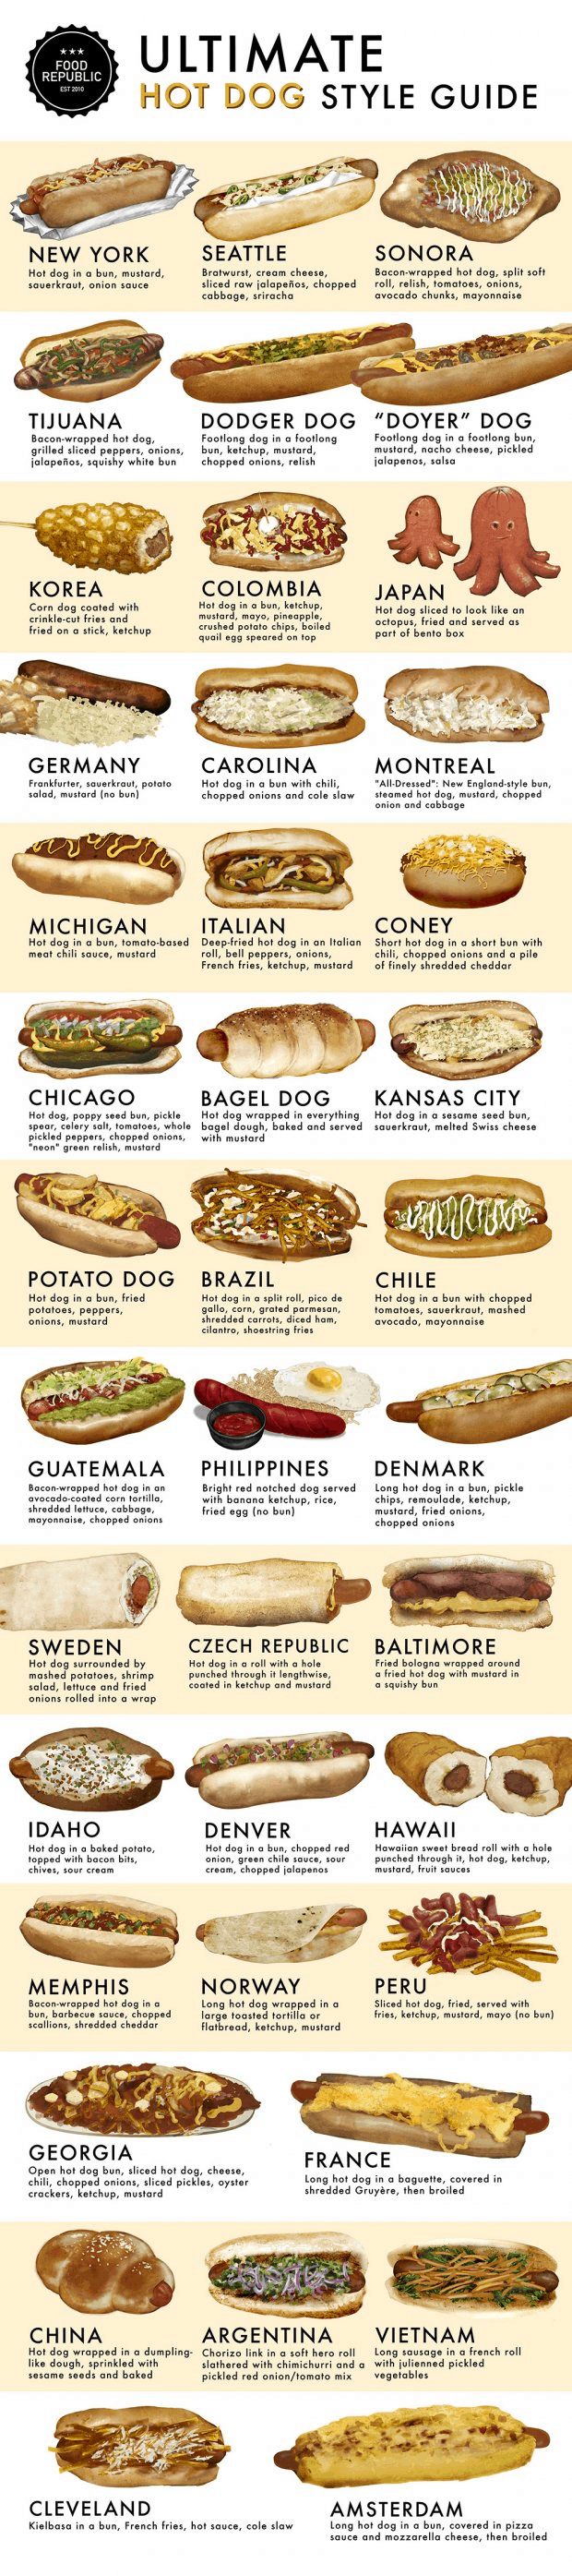 Ultimate Hotdog Guide Infographic